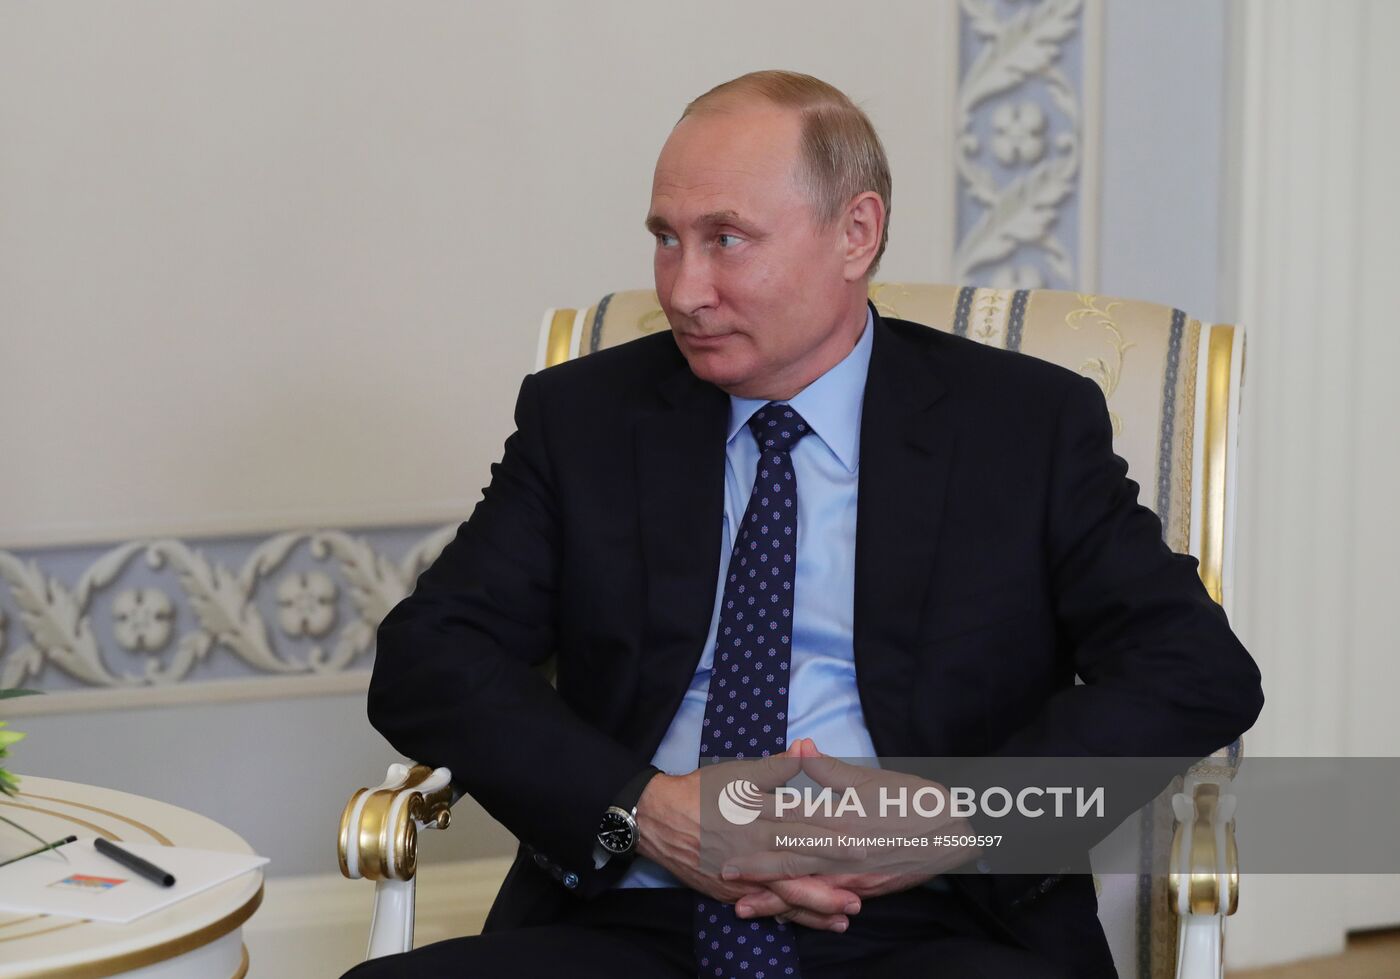 Президент РФ В. Путин встретился с президентом ЦАР Ф.-А. Туадерой